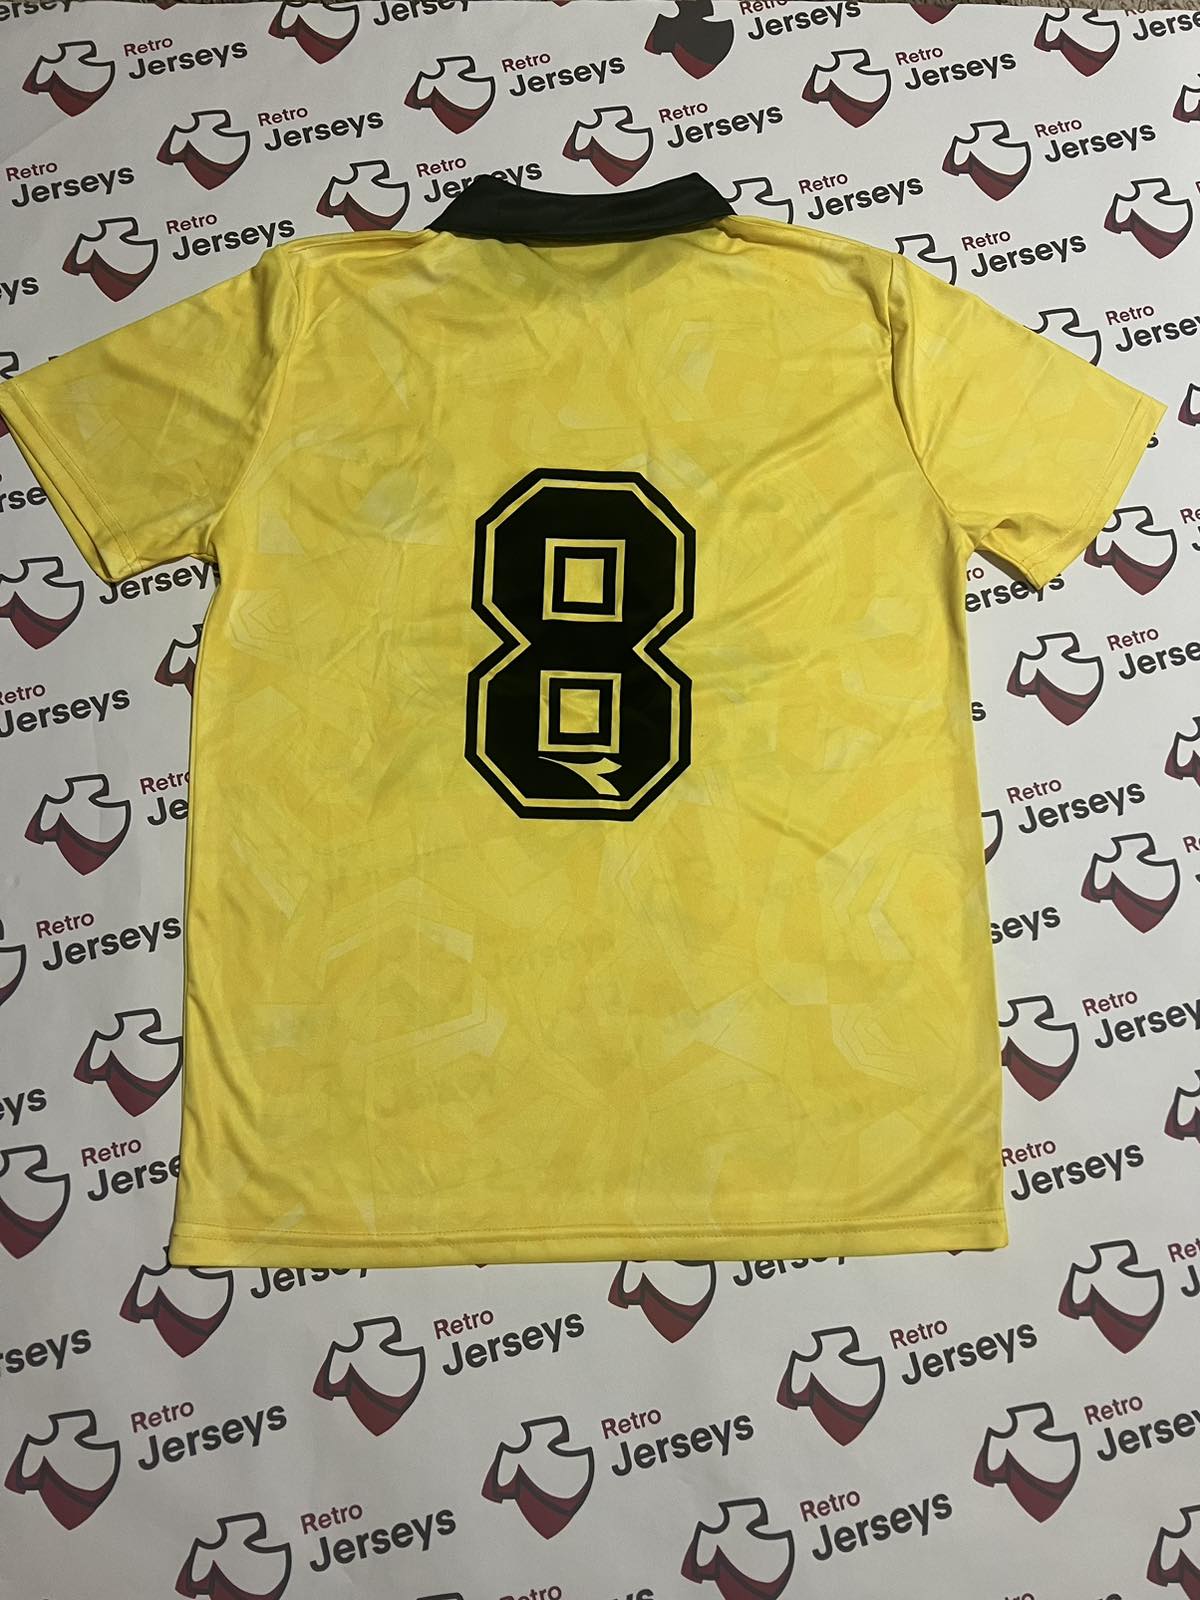 AEK Athens Shirt 1992-1993 Home - Retro Jersey, φανέλα αεκ - Retro Jerseys